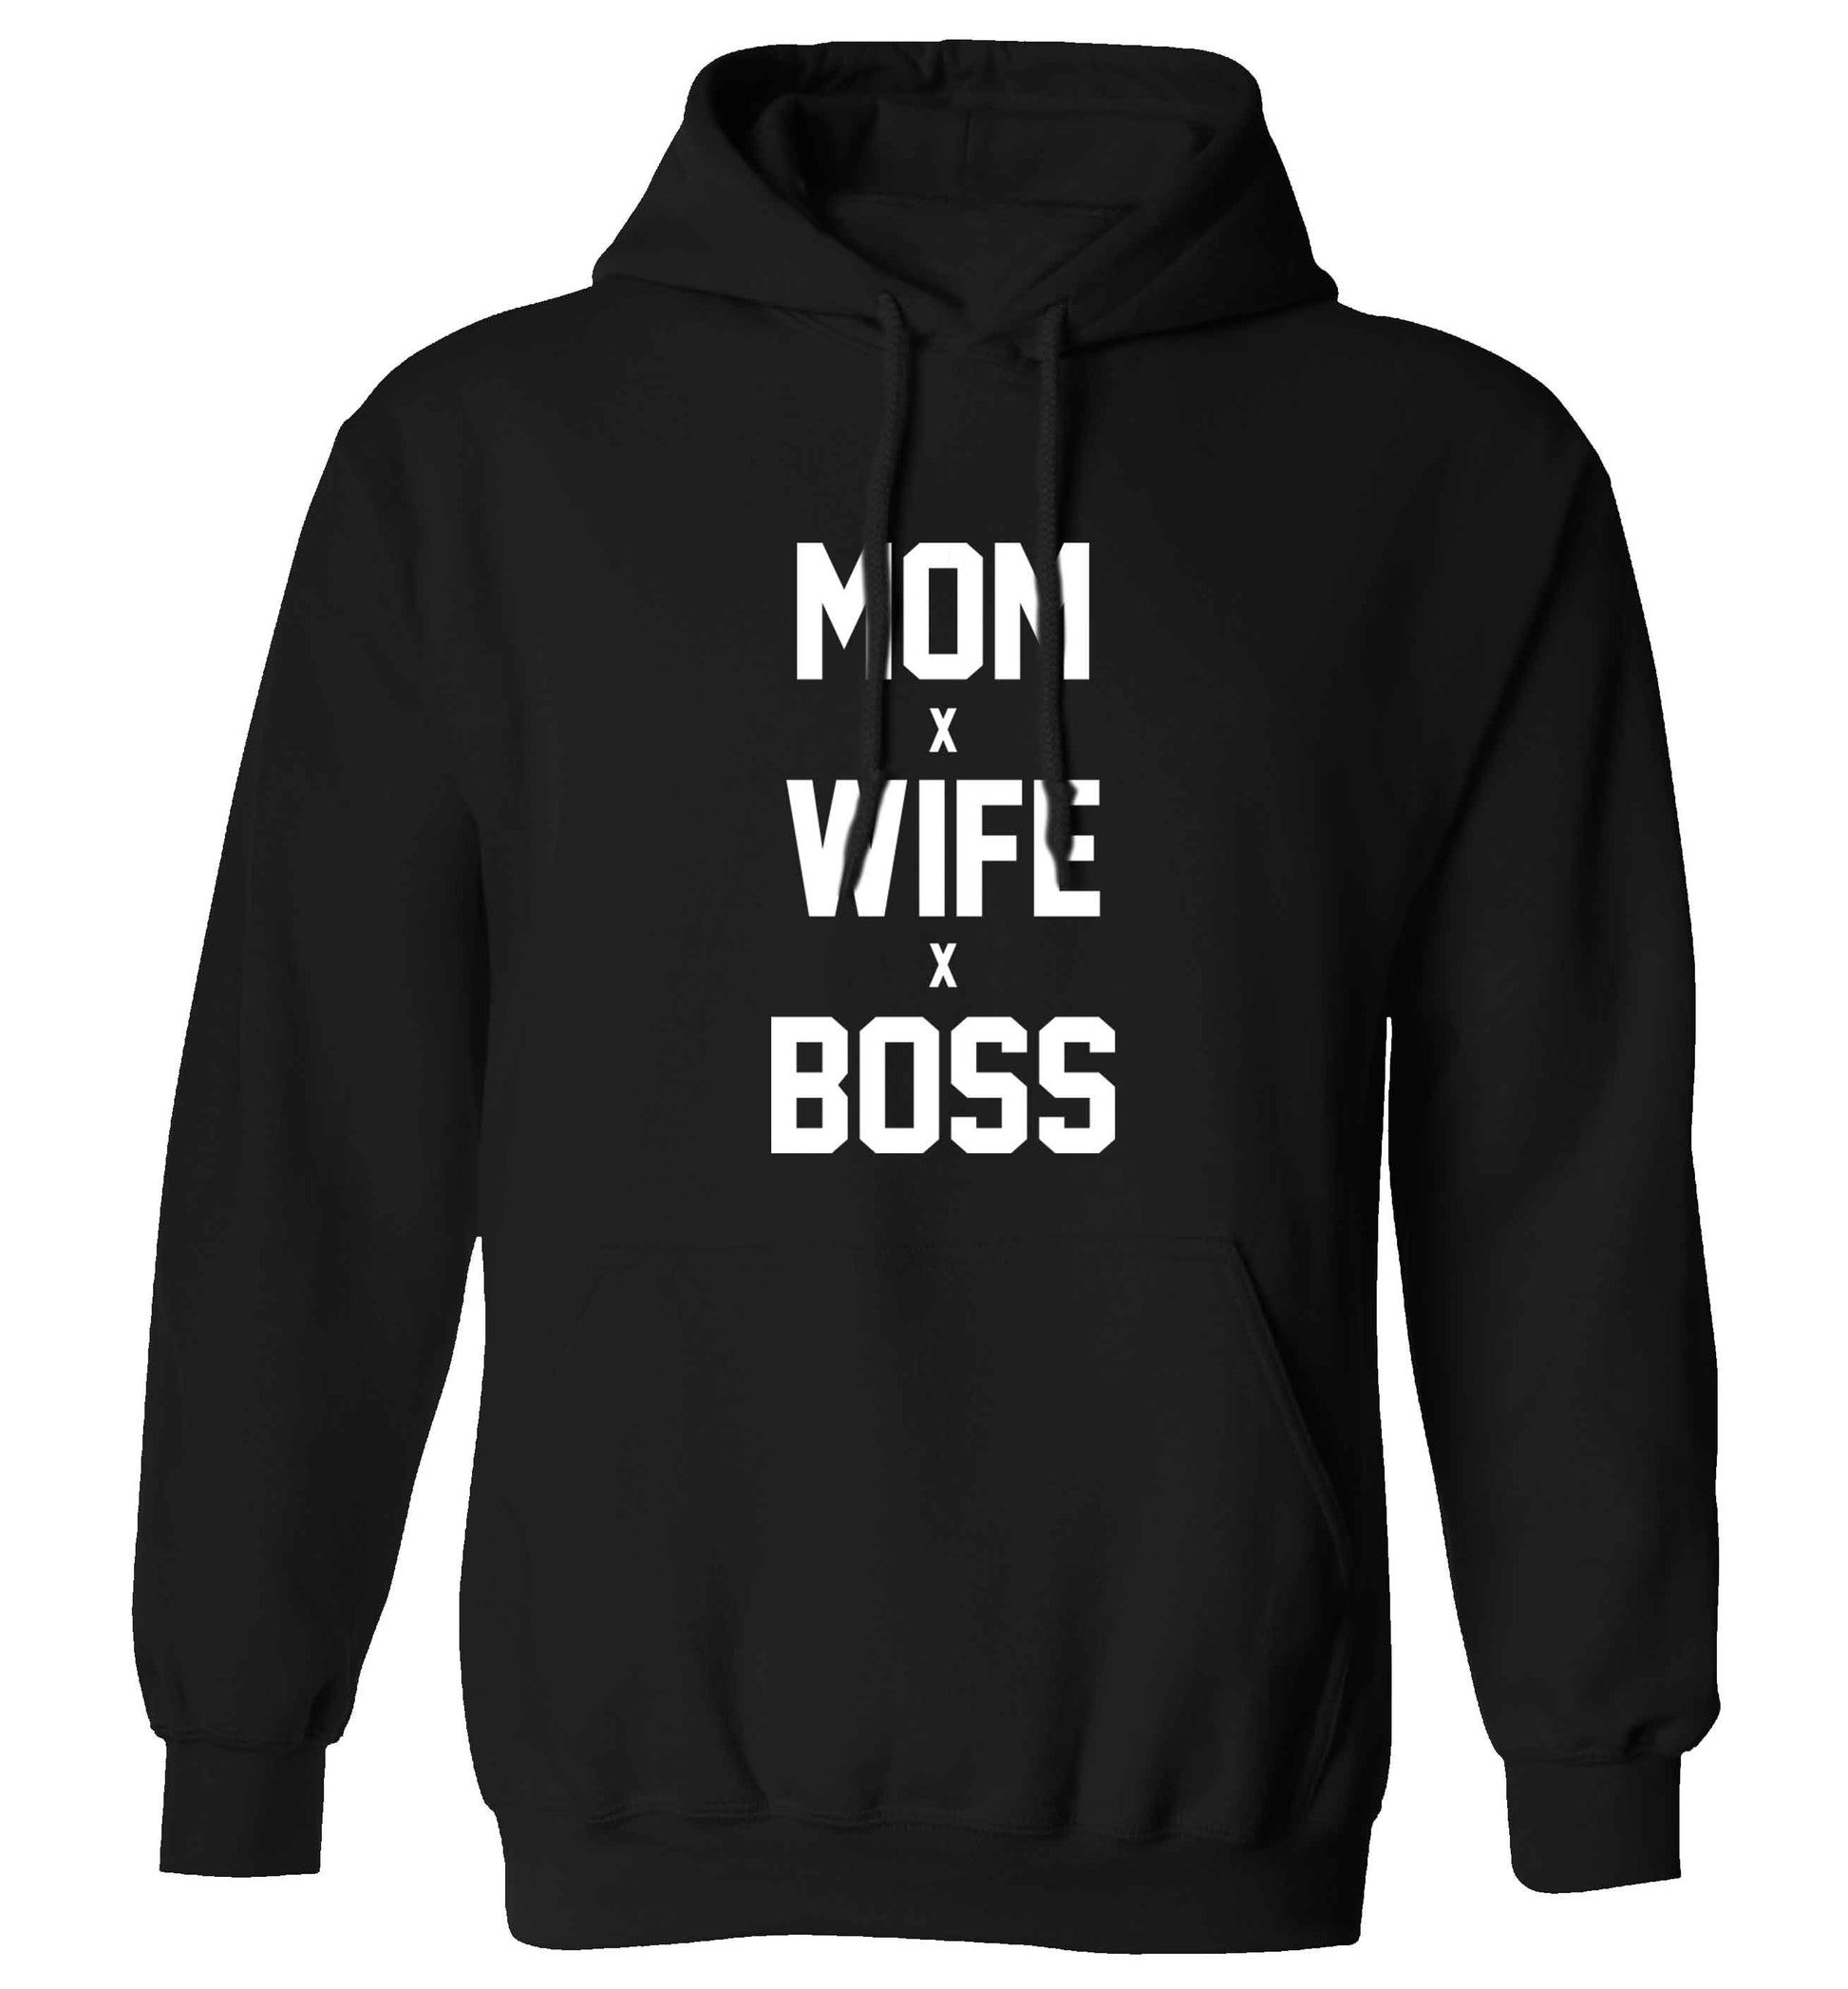 Mum wife boss adults unisex black hoodie 2XL